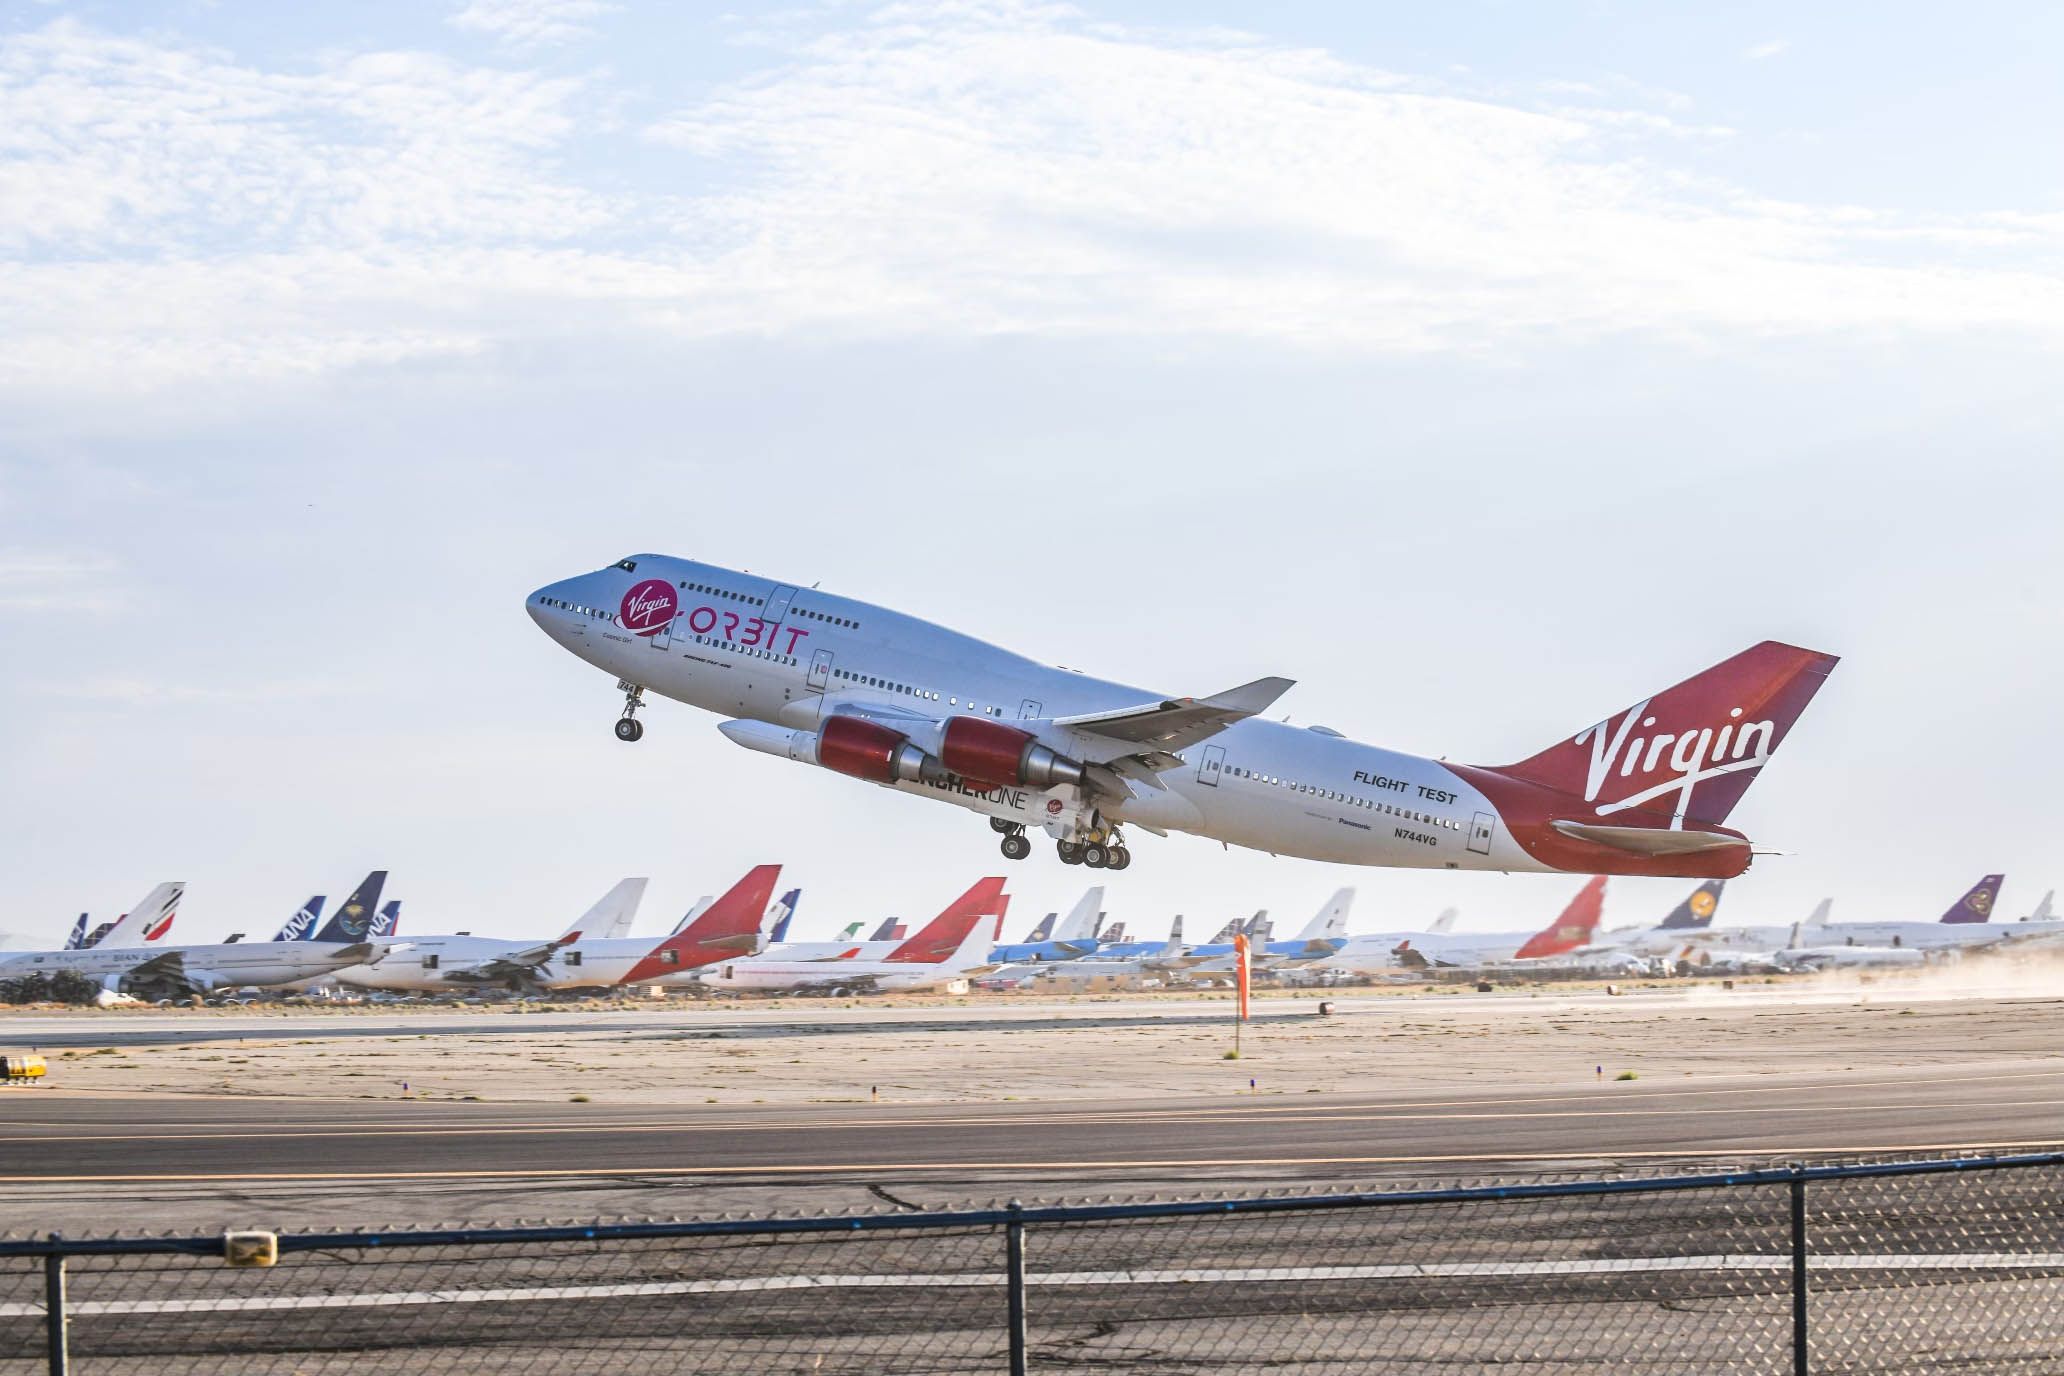 Virgin Orbit 747 take-off